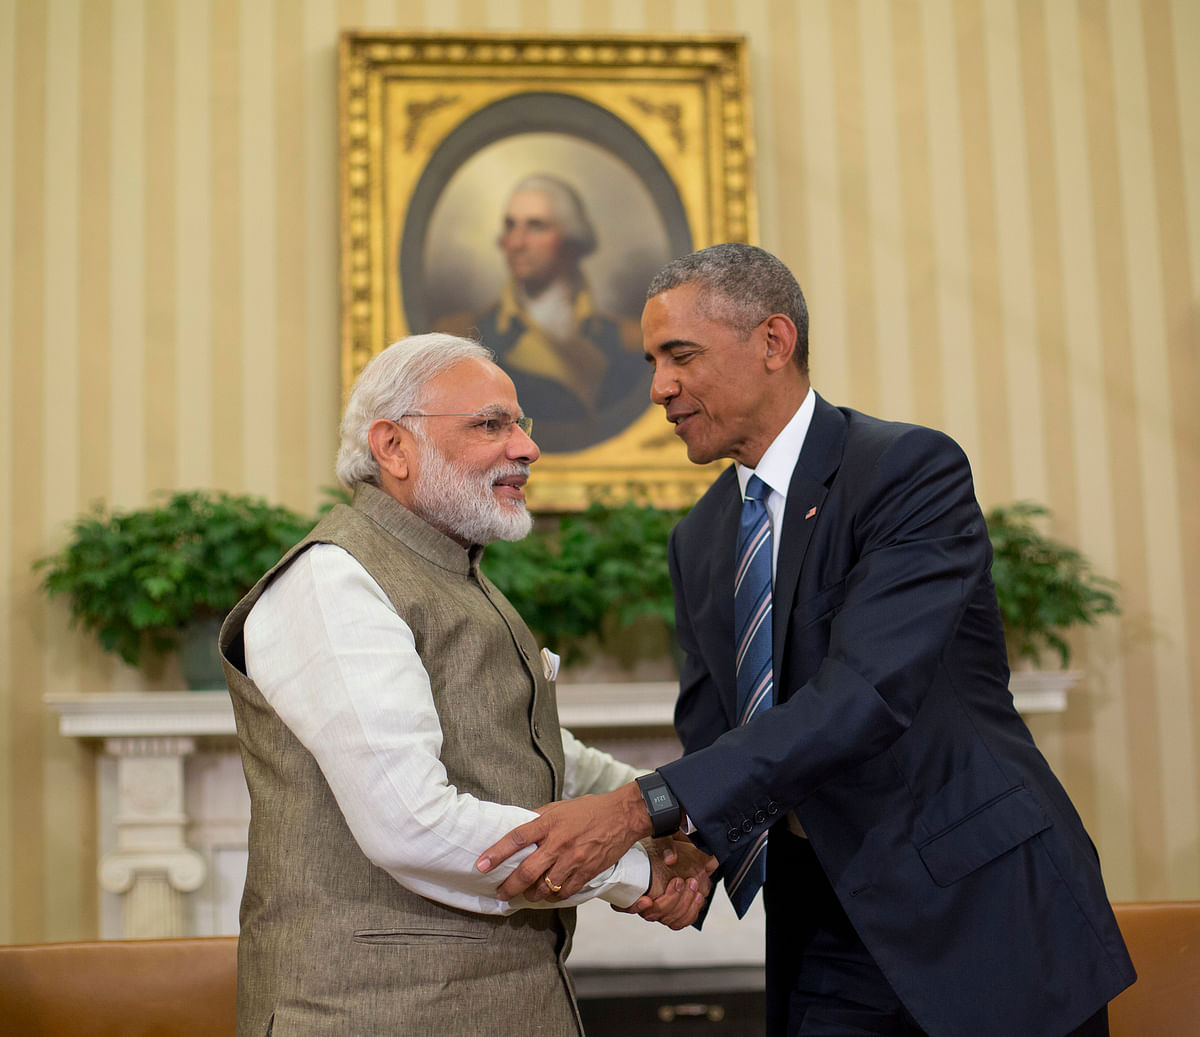 Human rights activists urge Obama to raise concerns over India’s slavery problem as Modi visits Washington.